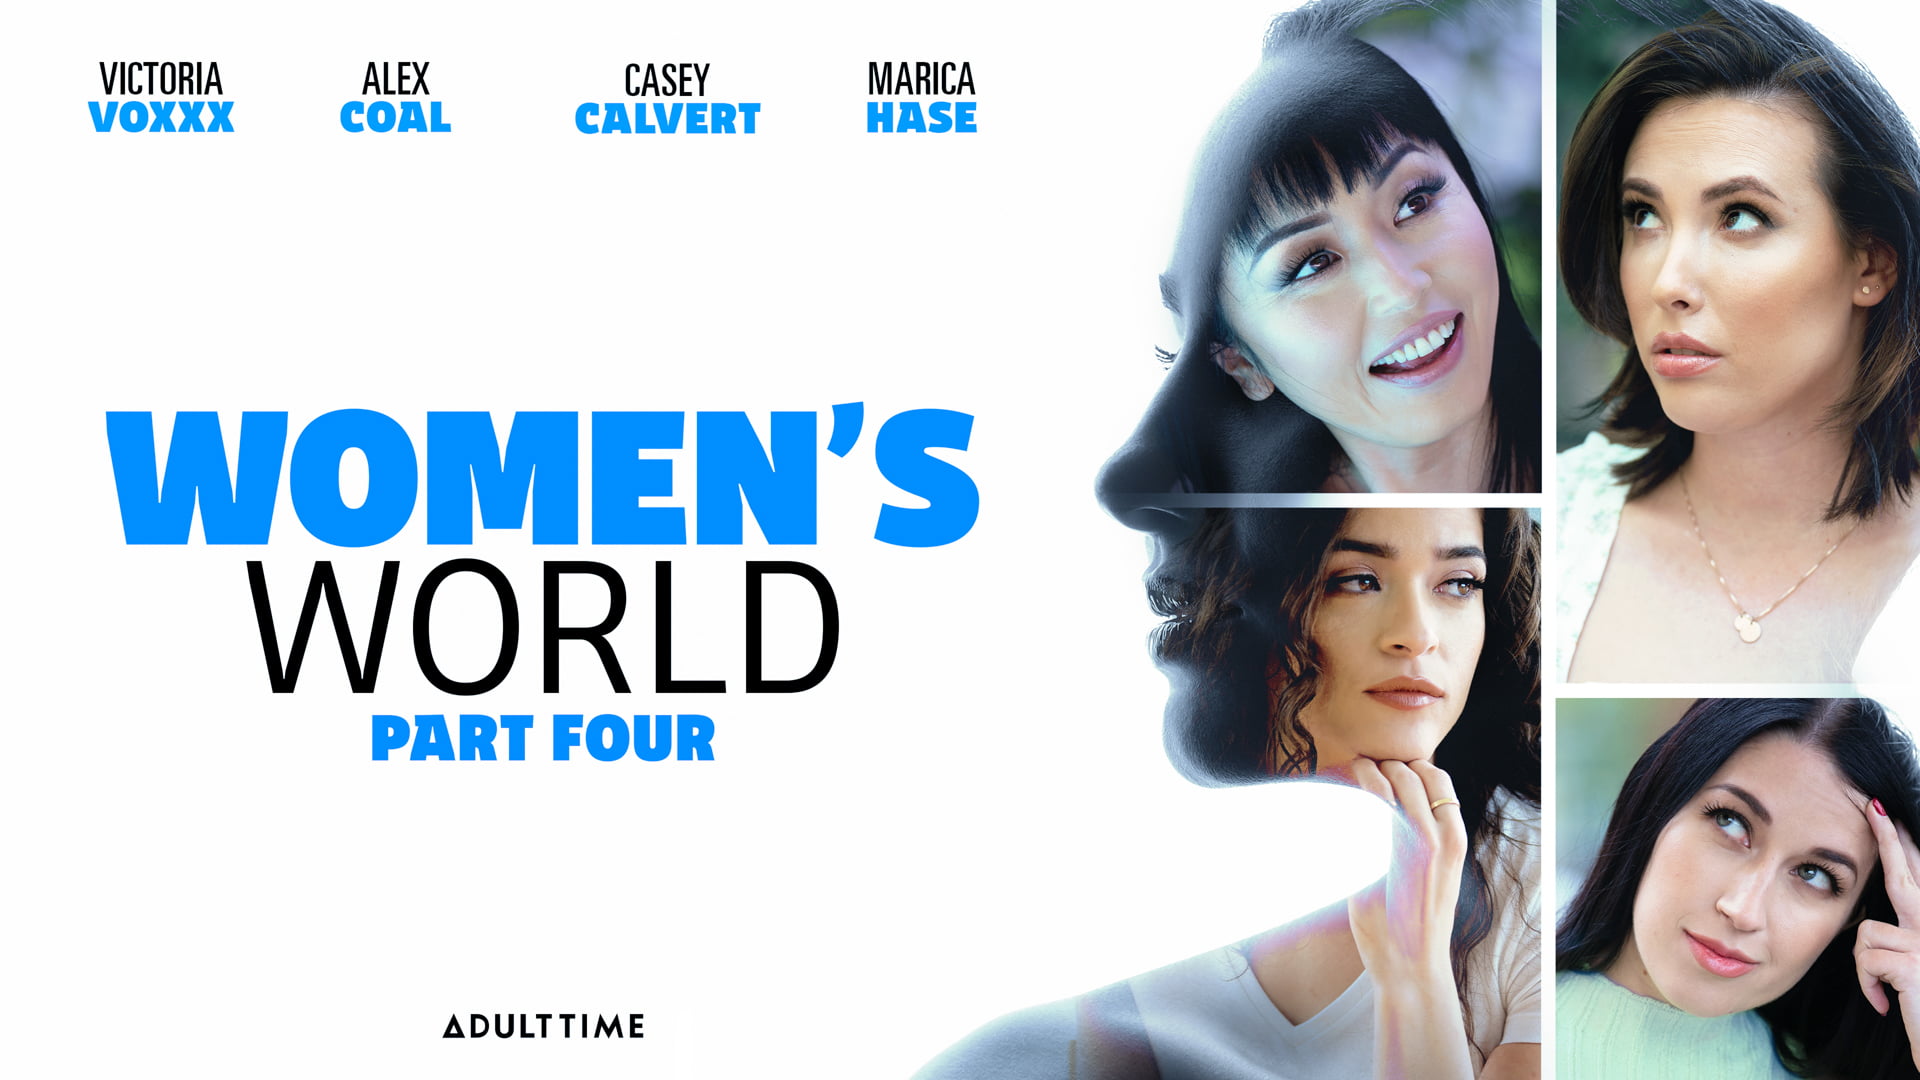 WomensWorld - Casey Calvert, Victoria Voxxx, Marica Hase And Alex Coal - Women